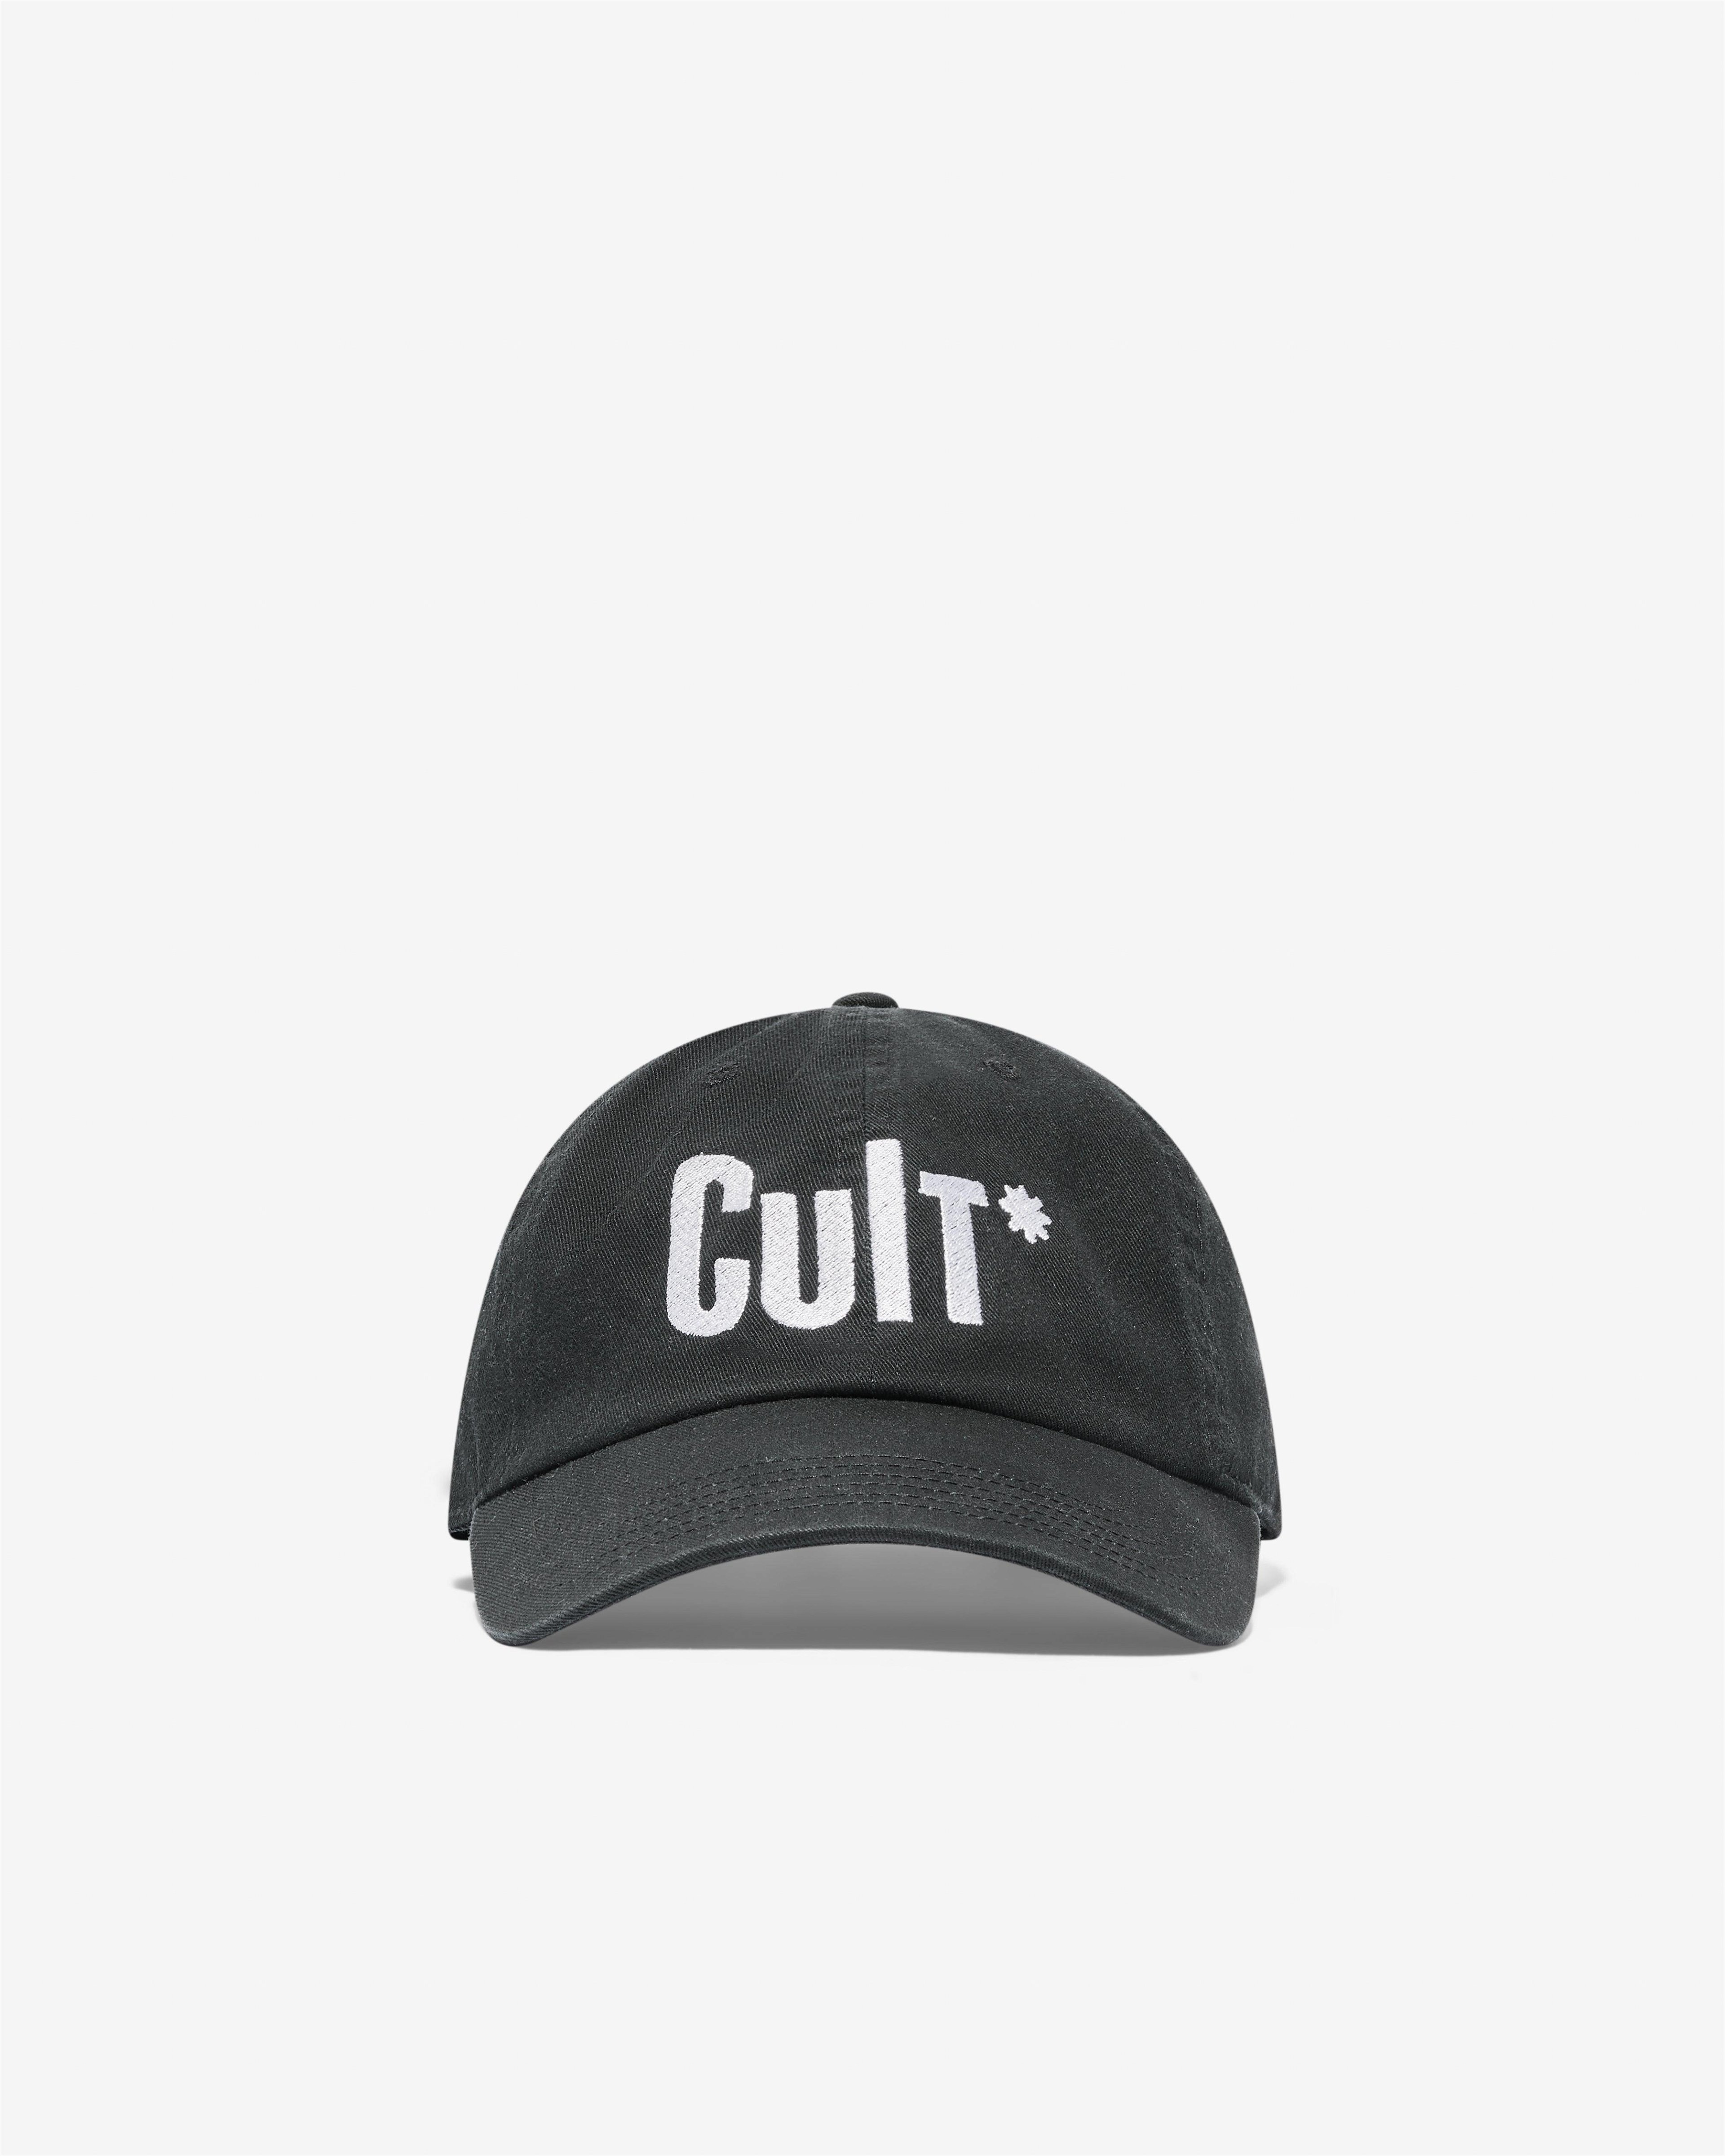 Cult* Magazine - Cult* Logo Cap - (Black) by CULT* MAGAZINE